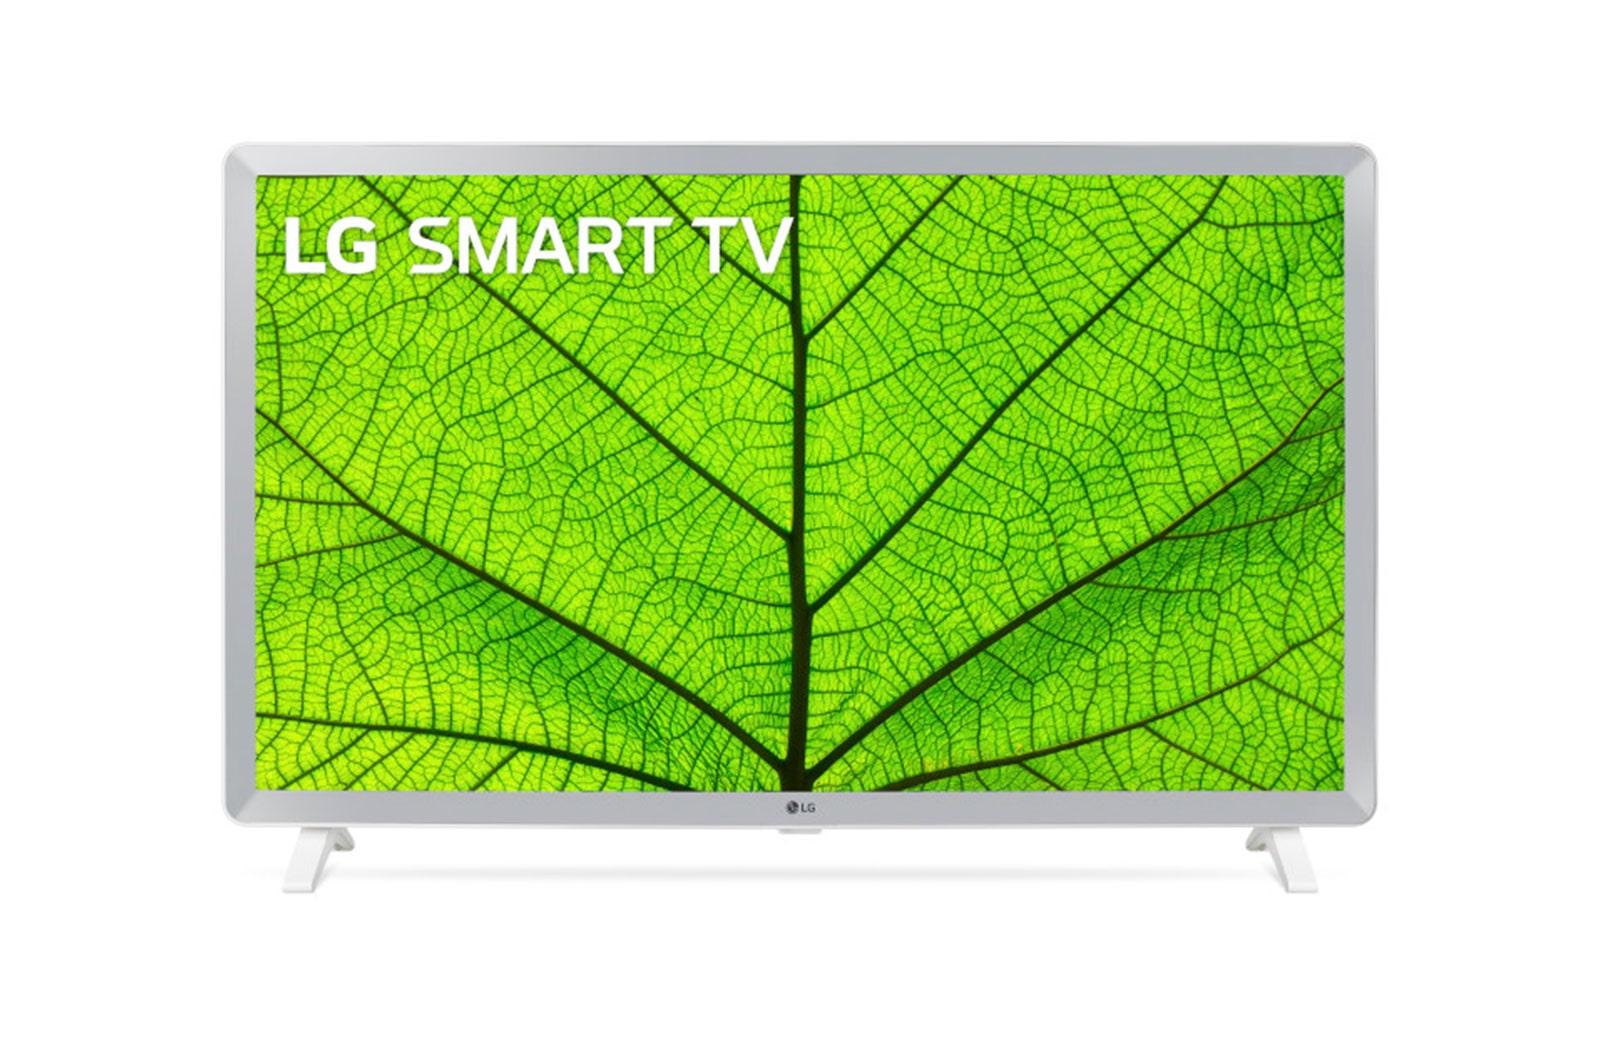 LG 32 inch Class 720p Smart HD TV (31.5'' Diag)